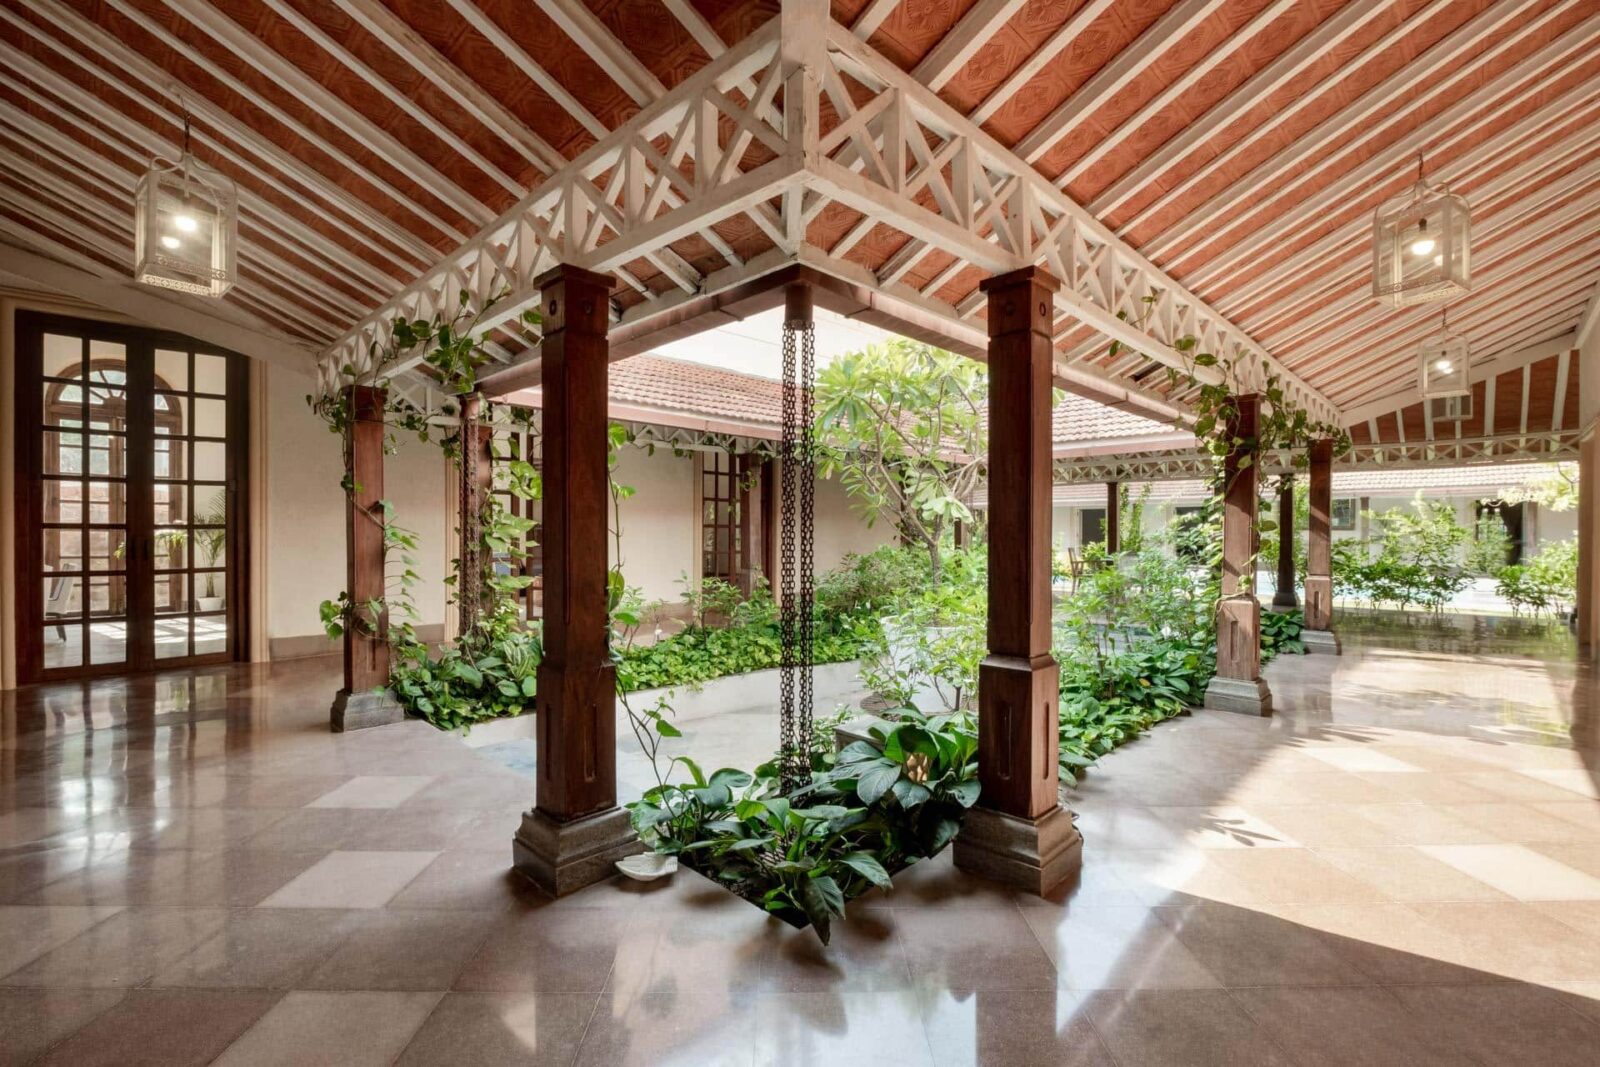 Villa Azul - Luxury Villas with Private Pool for Sale - Elegant Courtyard